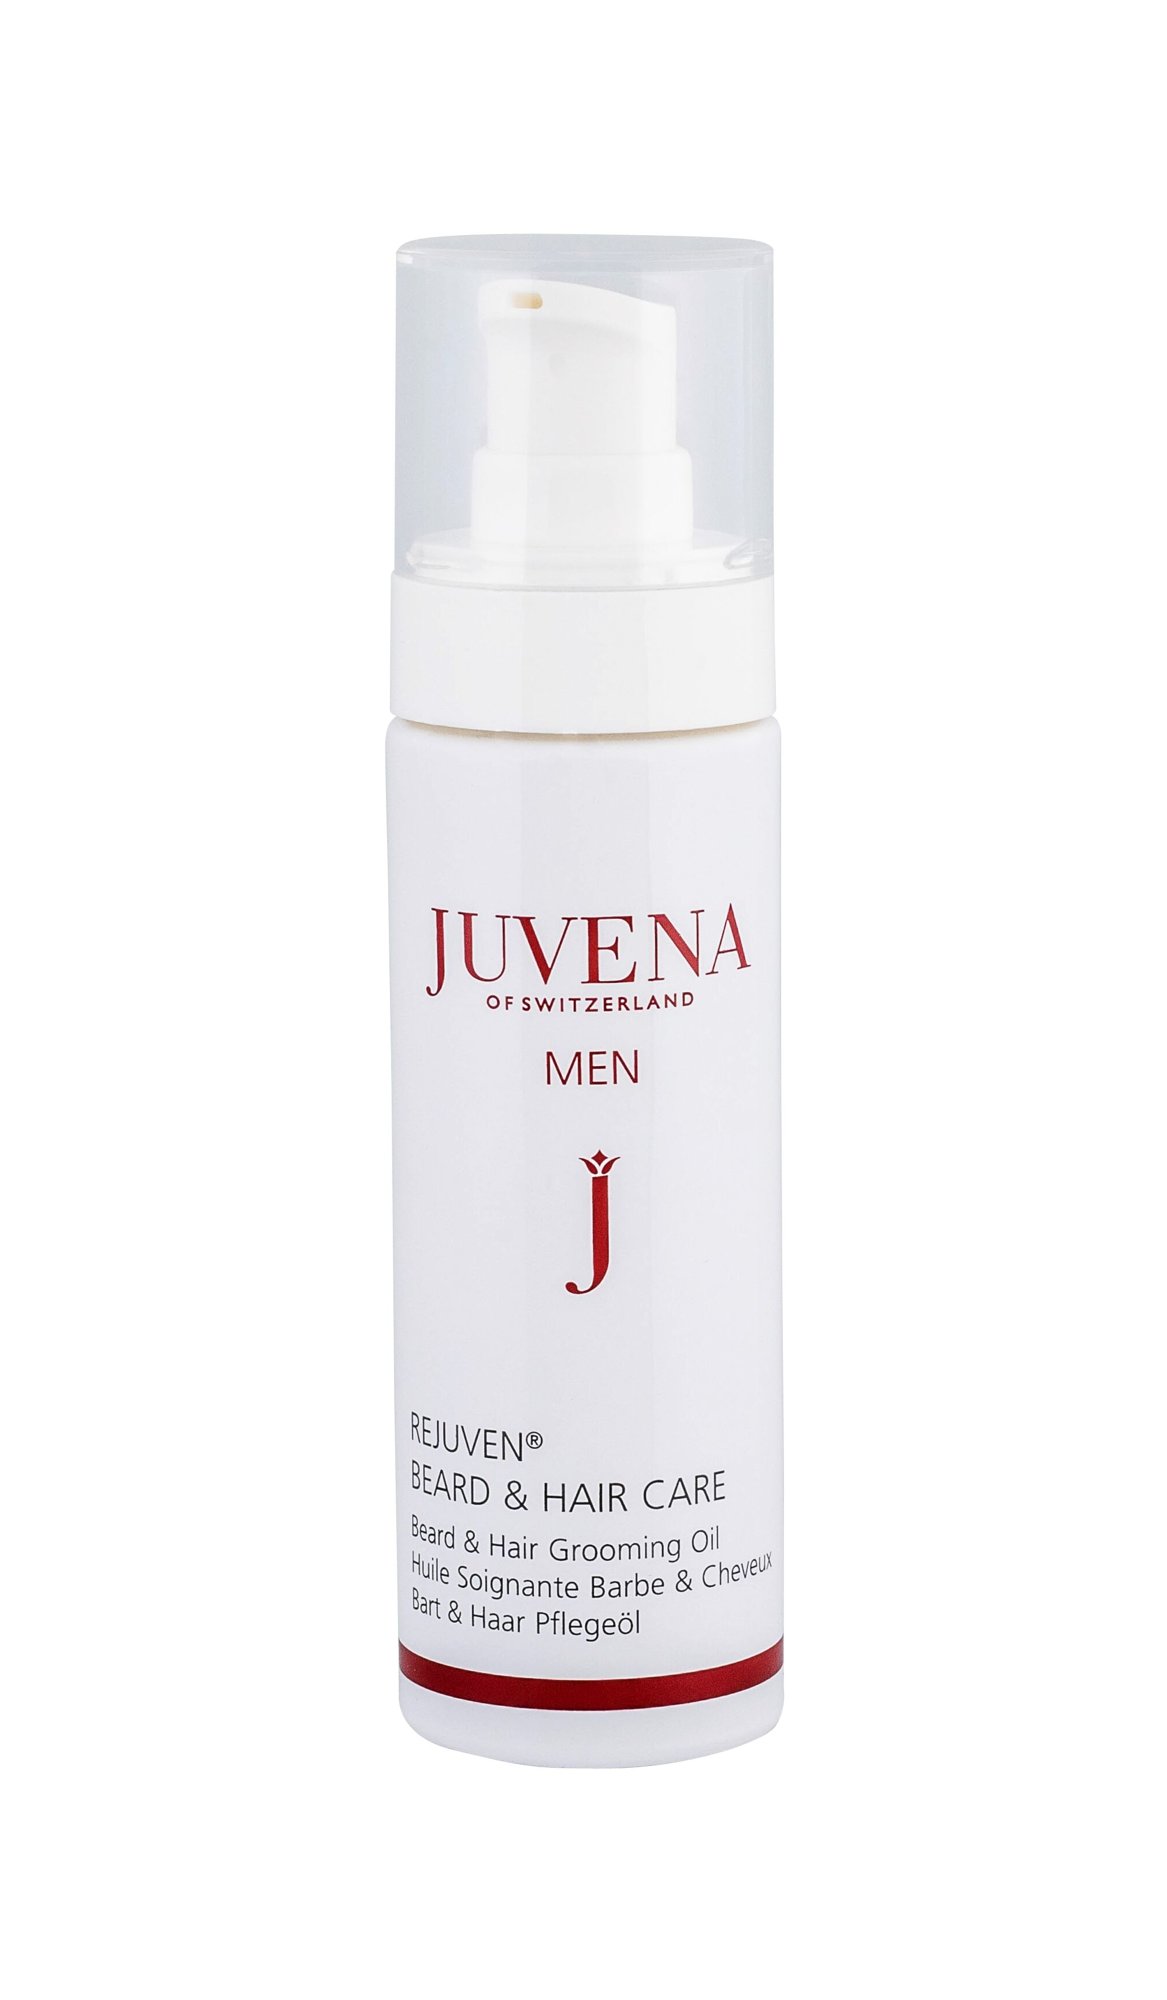 Juvena Rejuven® Men Beard & Hair Grooming Oil 50ml barzdos aliejus Testeris